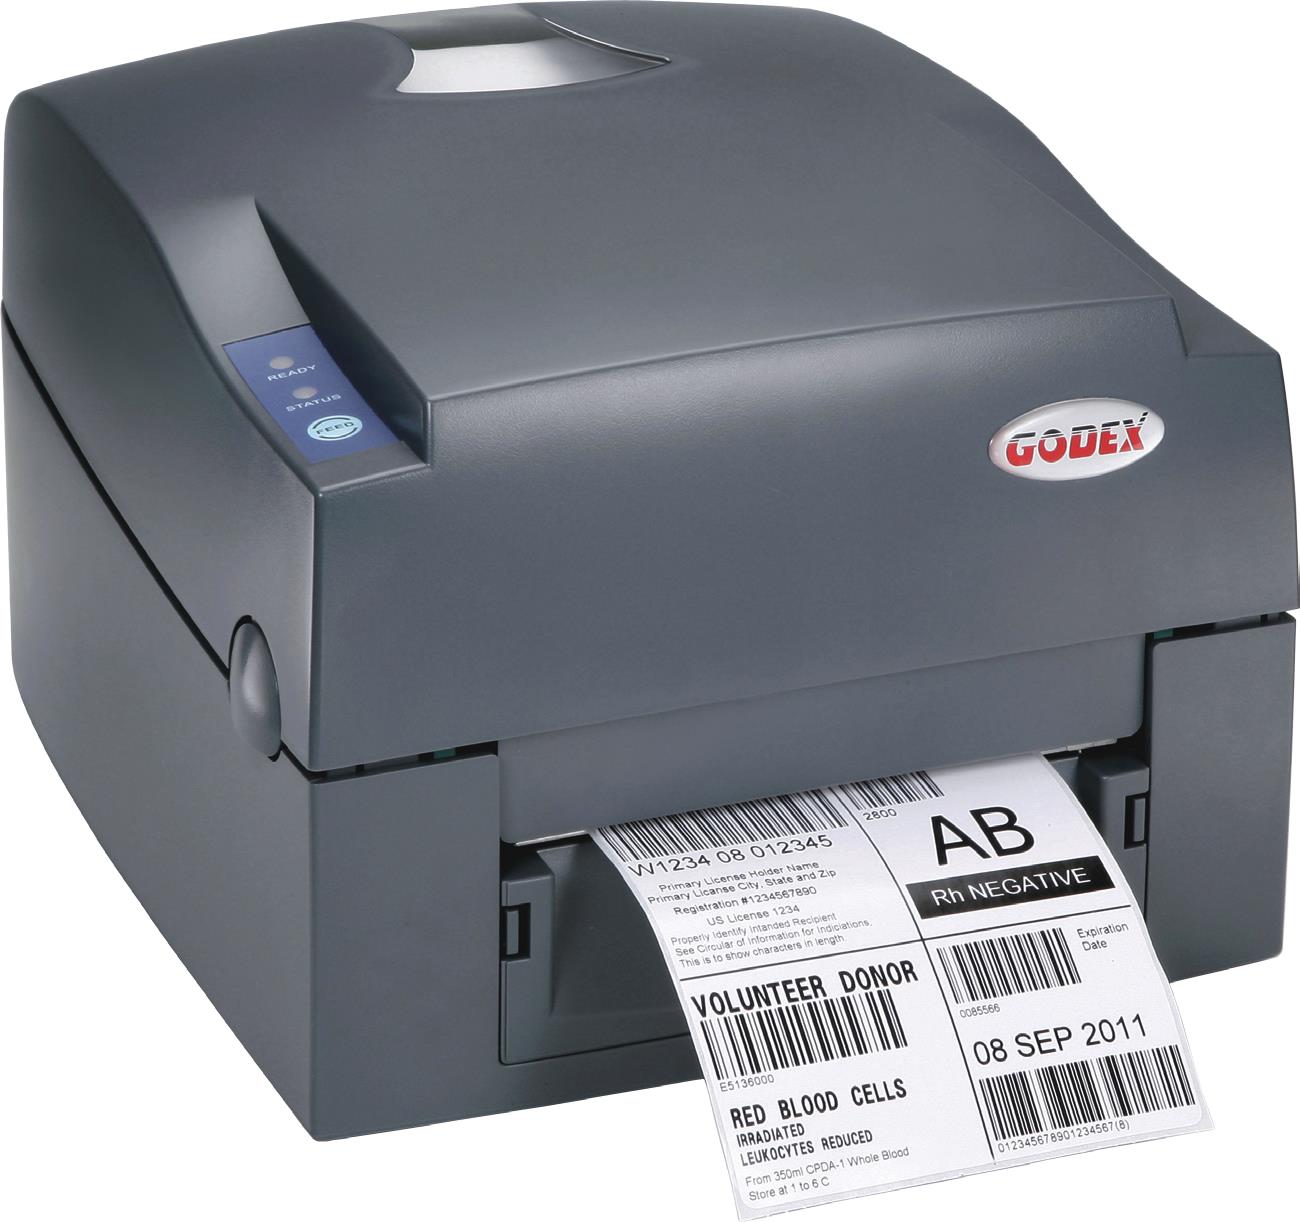 GoDEX Barcode Label Printer G530, 300dpi